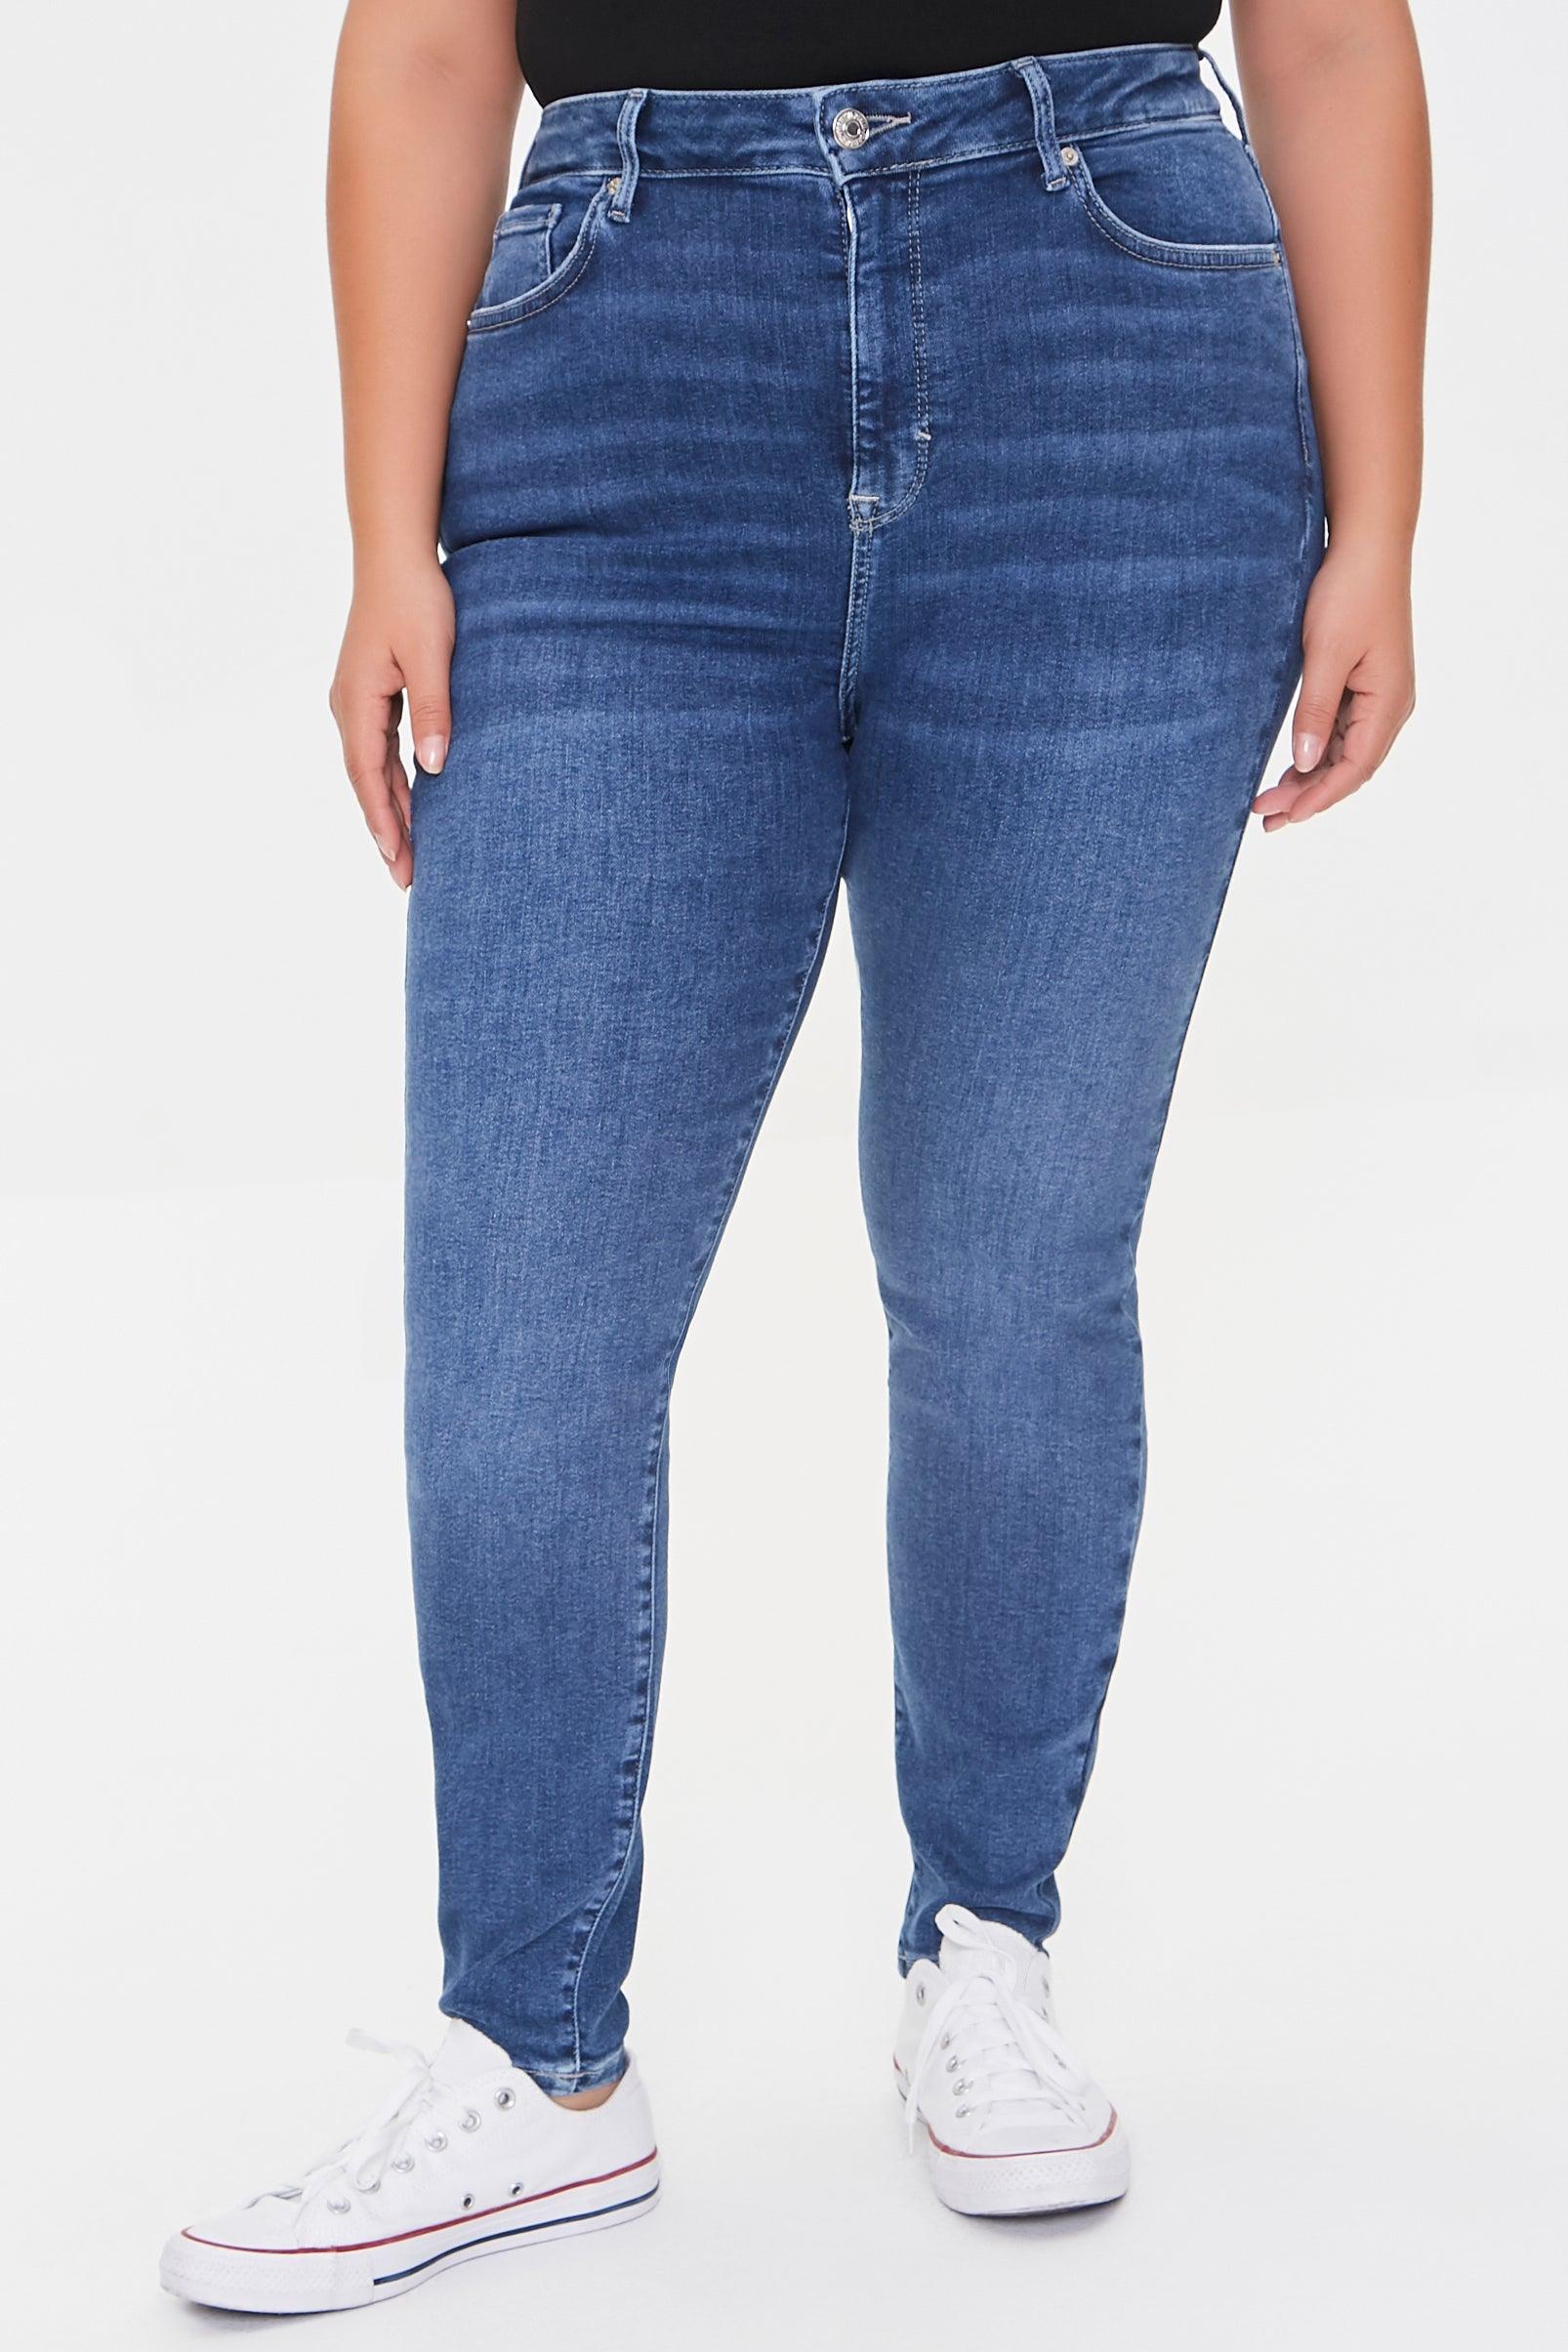 Mediumdenim Plus Size Whiskered Skinny Jeans 1